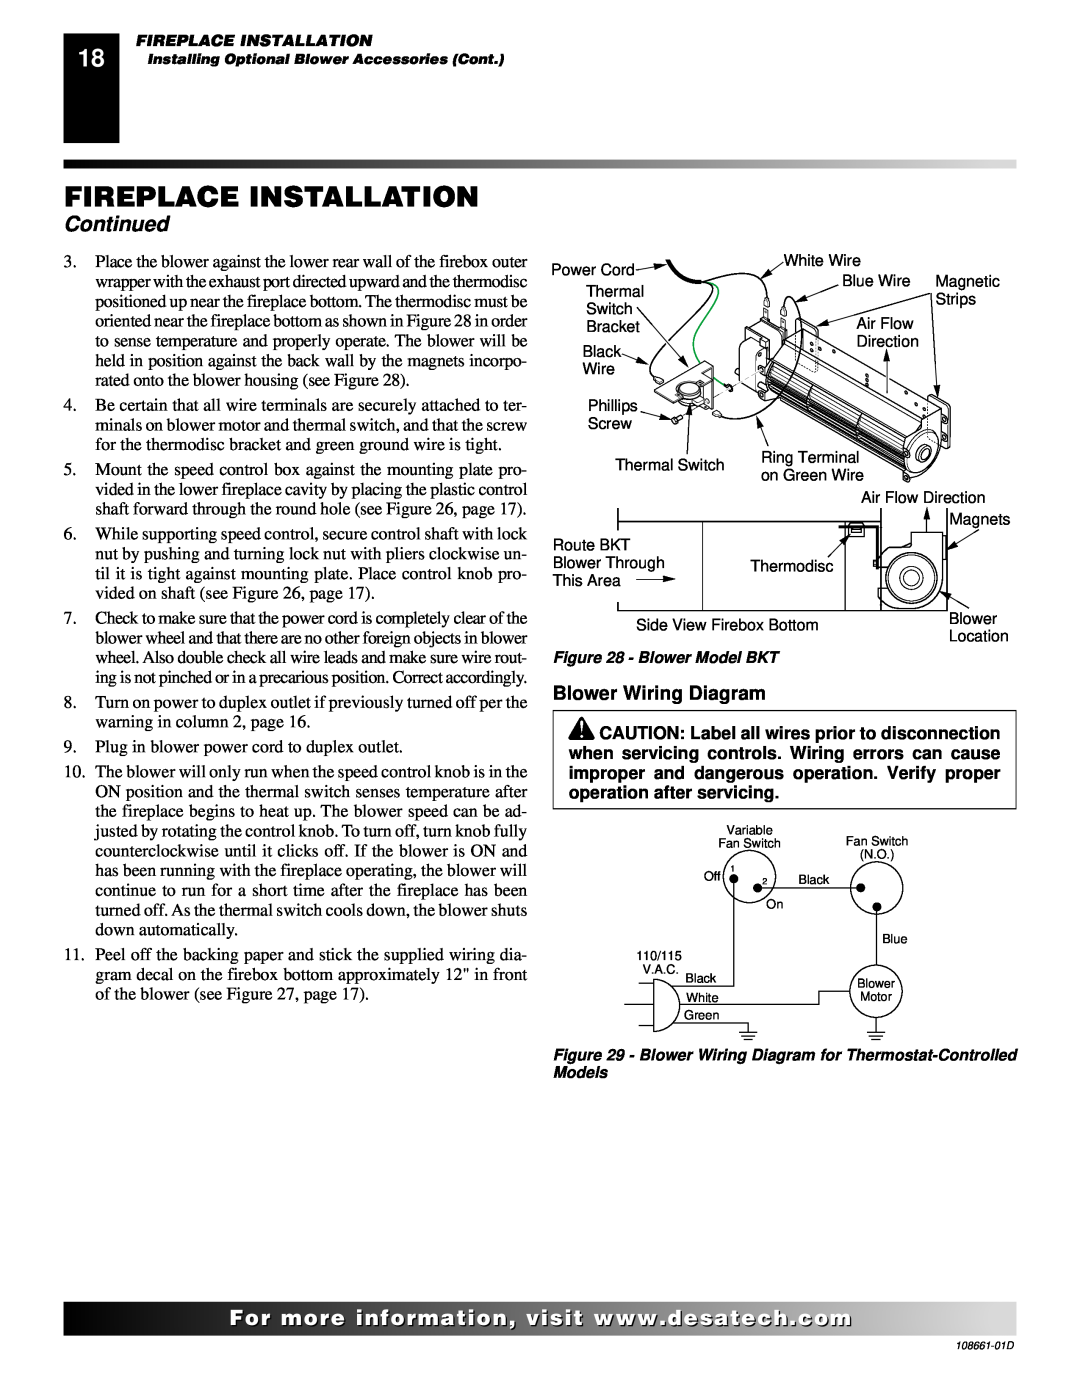 Desa (V)T32N, (V)T36N SERIES, CTDV36NR installation manual Fireplace Installation, Continued, Blower Wiring Diagram 